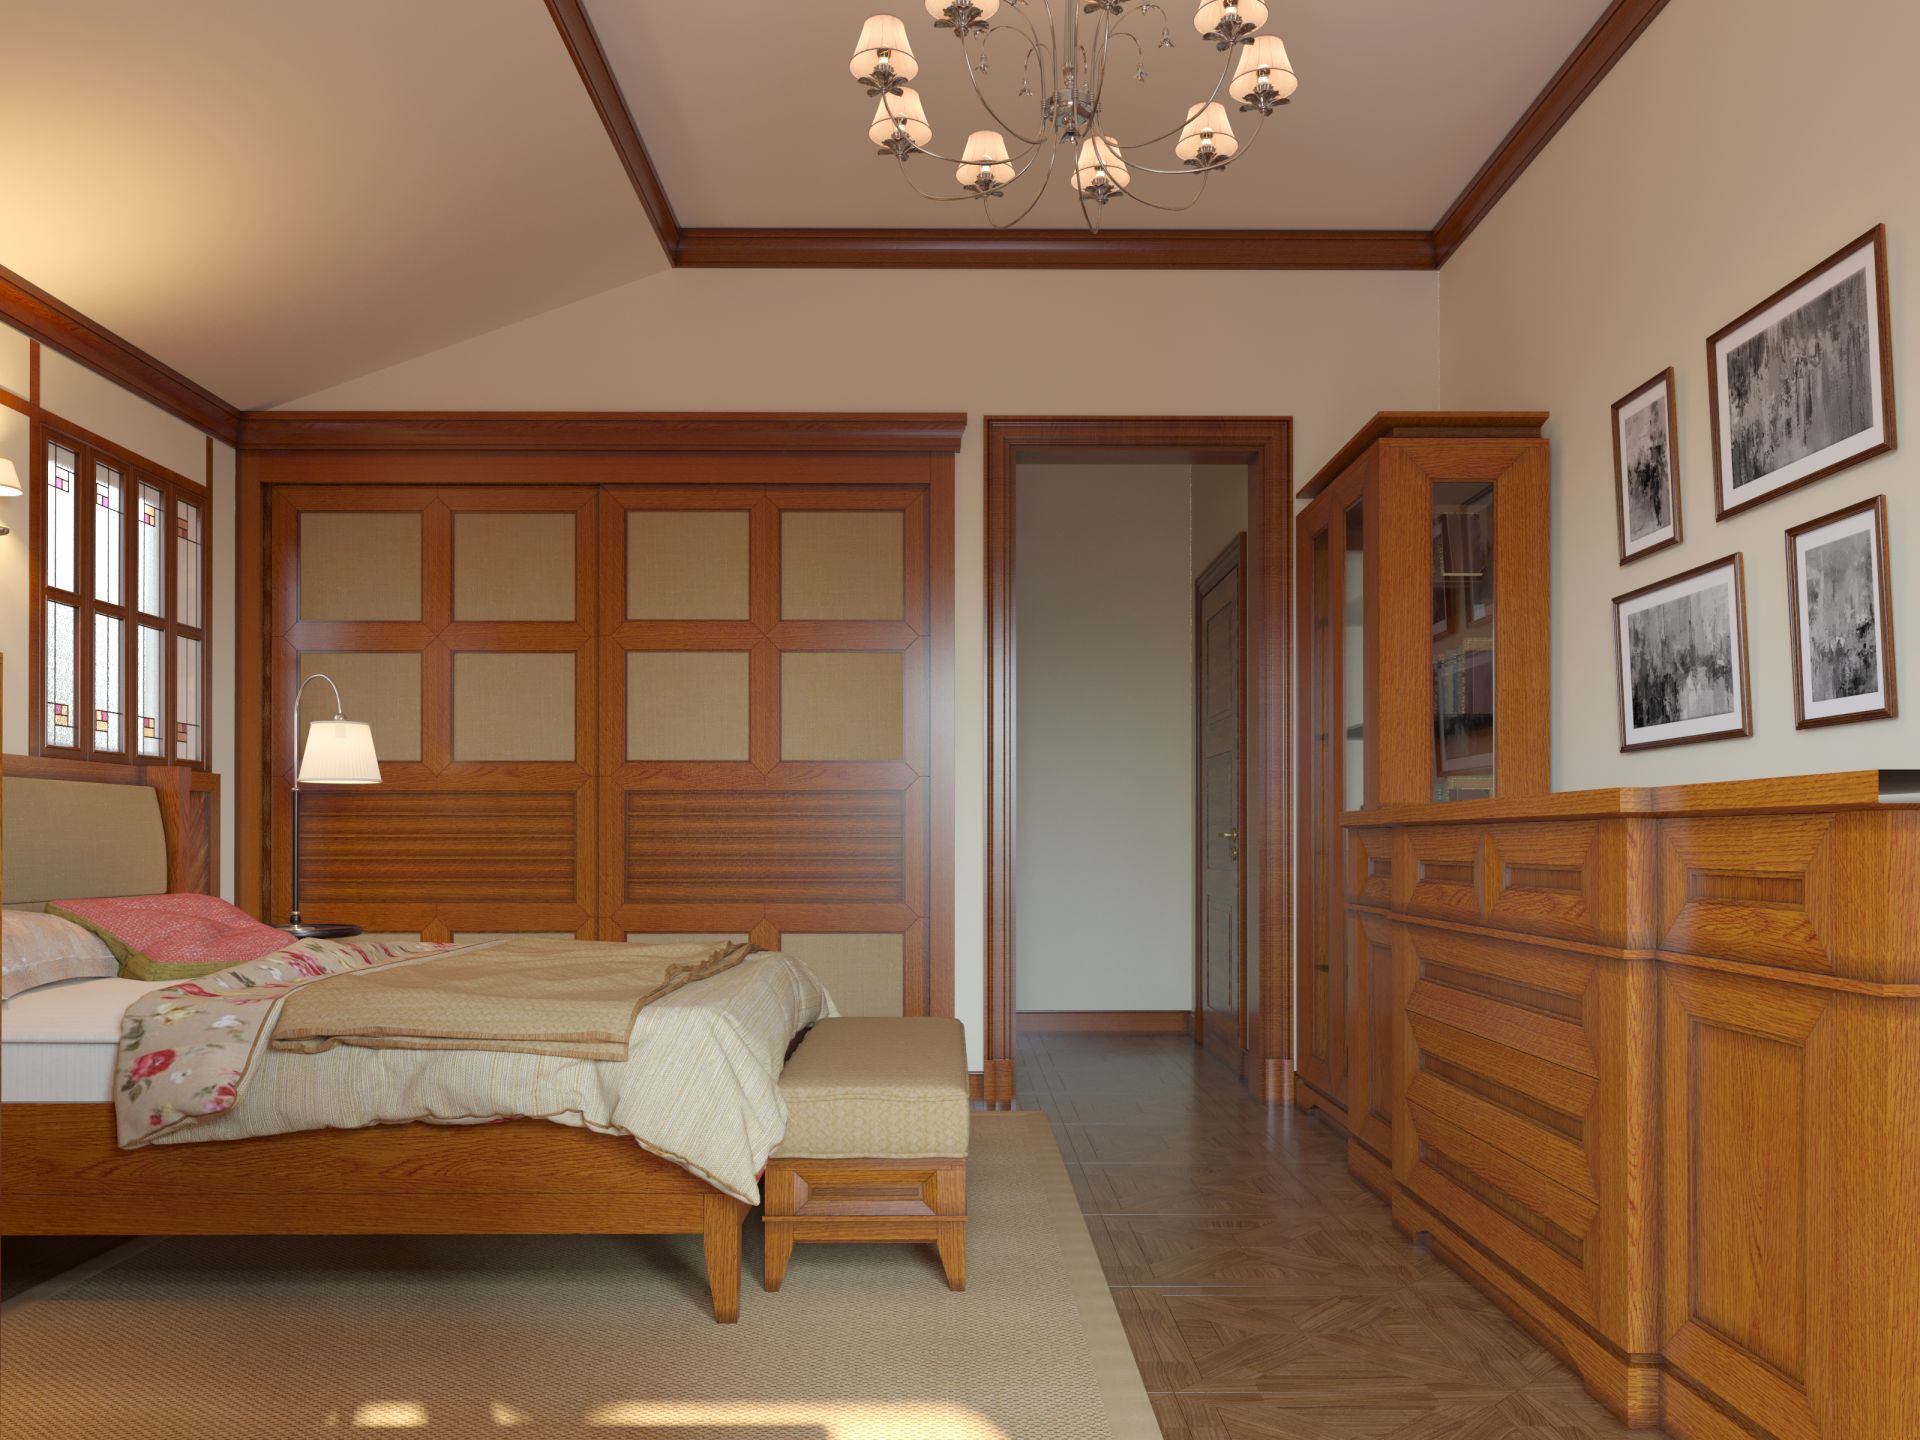 Design, American-style bedroom interior